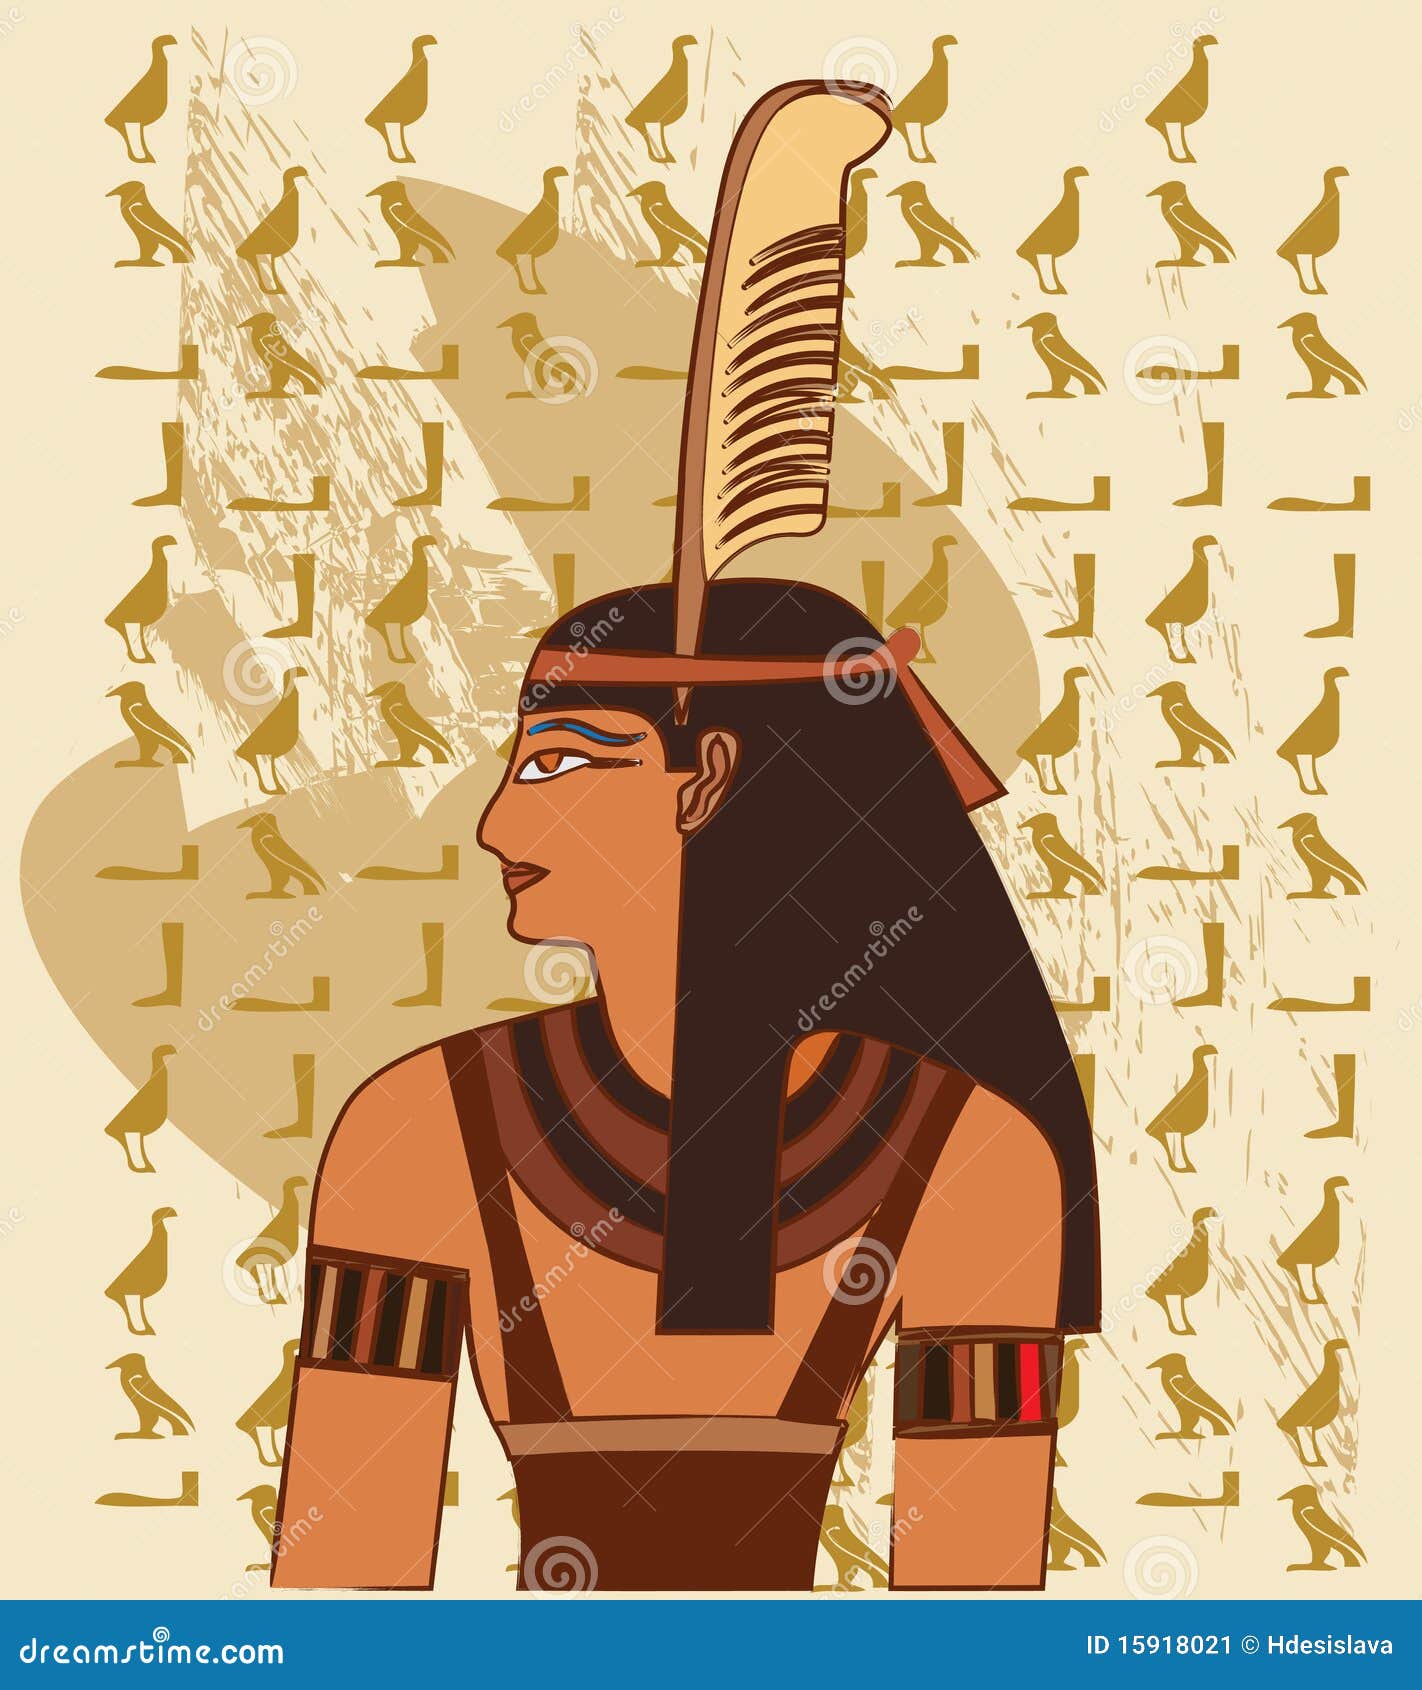 Ancient Egyptian Mythology